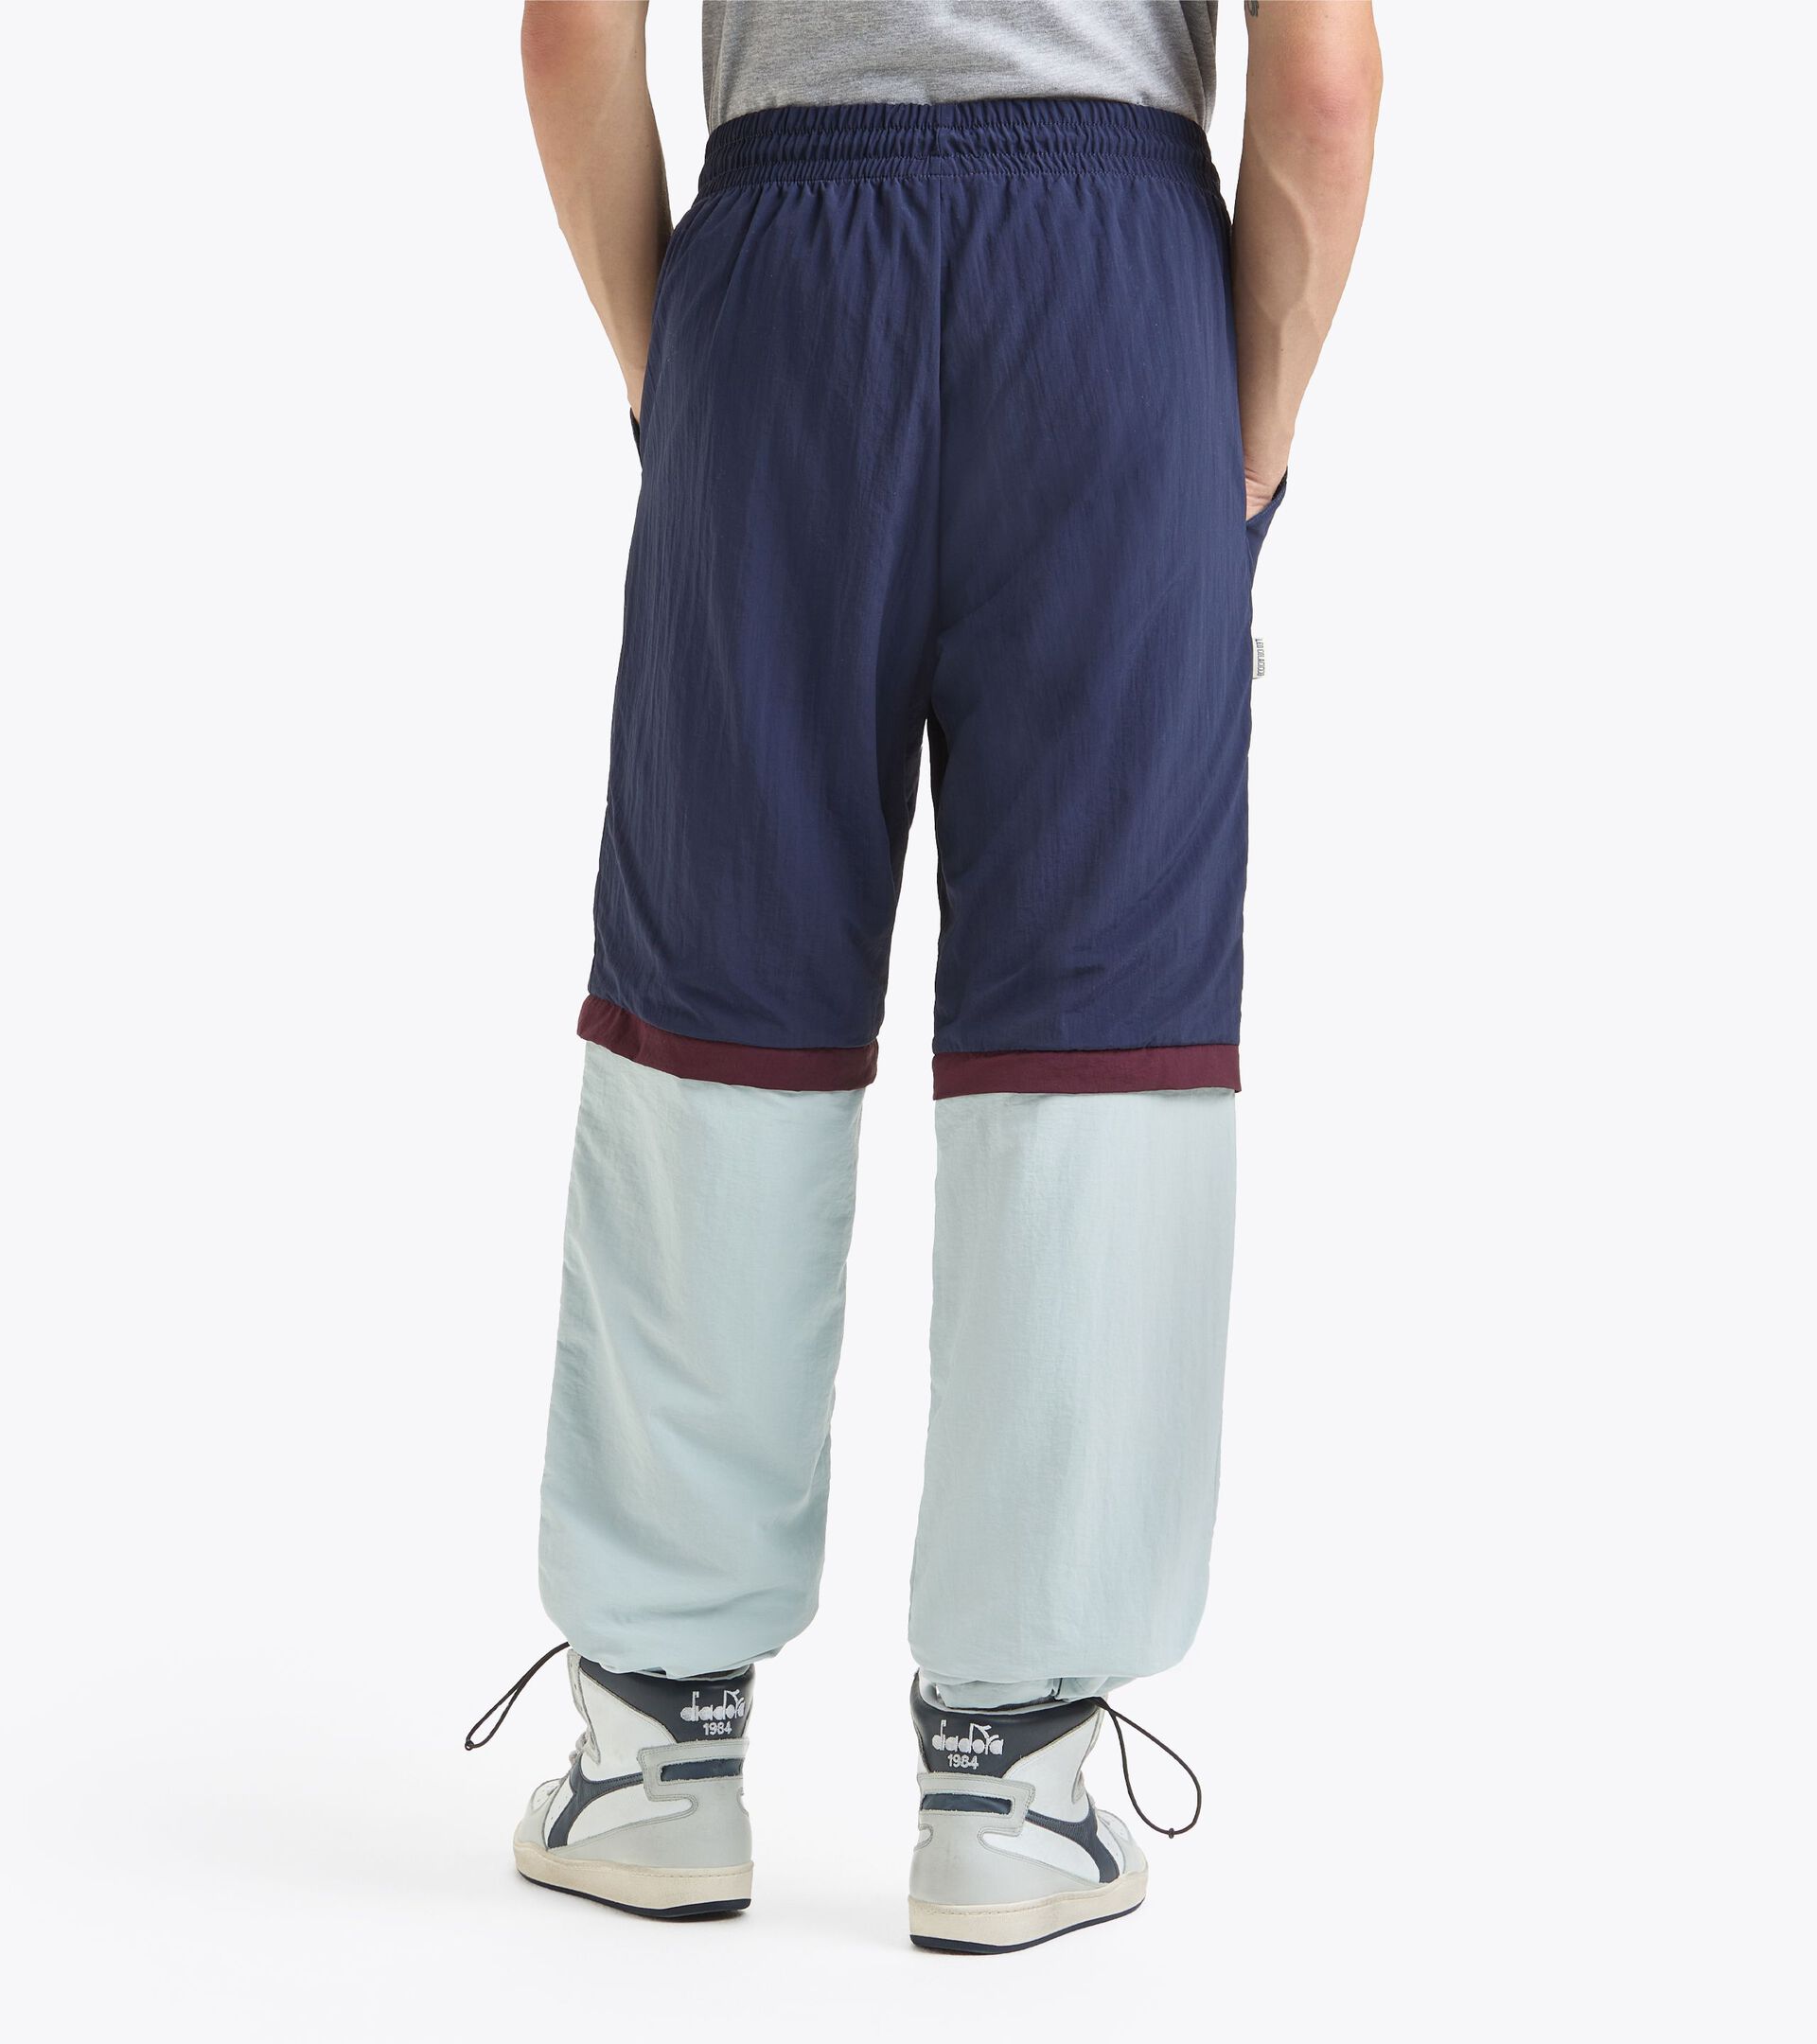 Pantalon modulable - Made in Italy - Gender Neutral TRACK PANT LEGACY OCEANA/GRATTE CIEL/VIN WINDSOR - Diadora